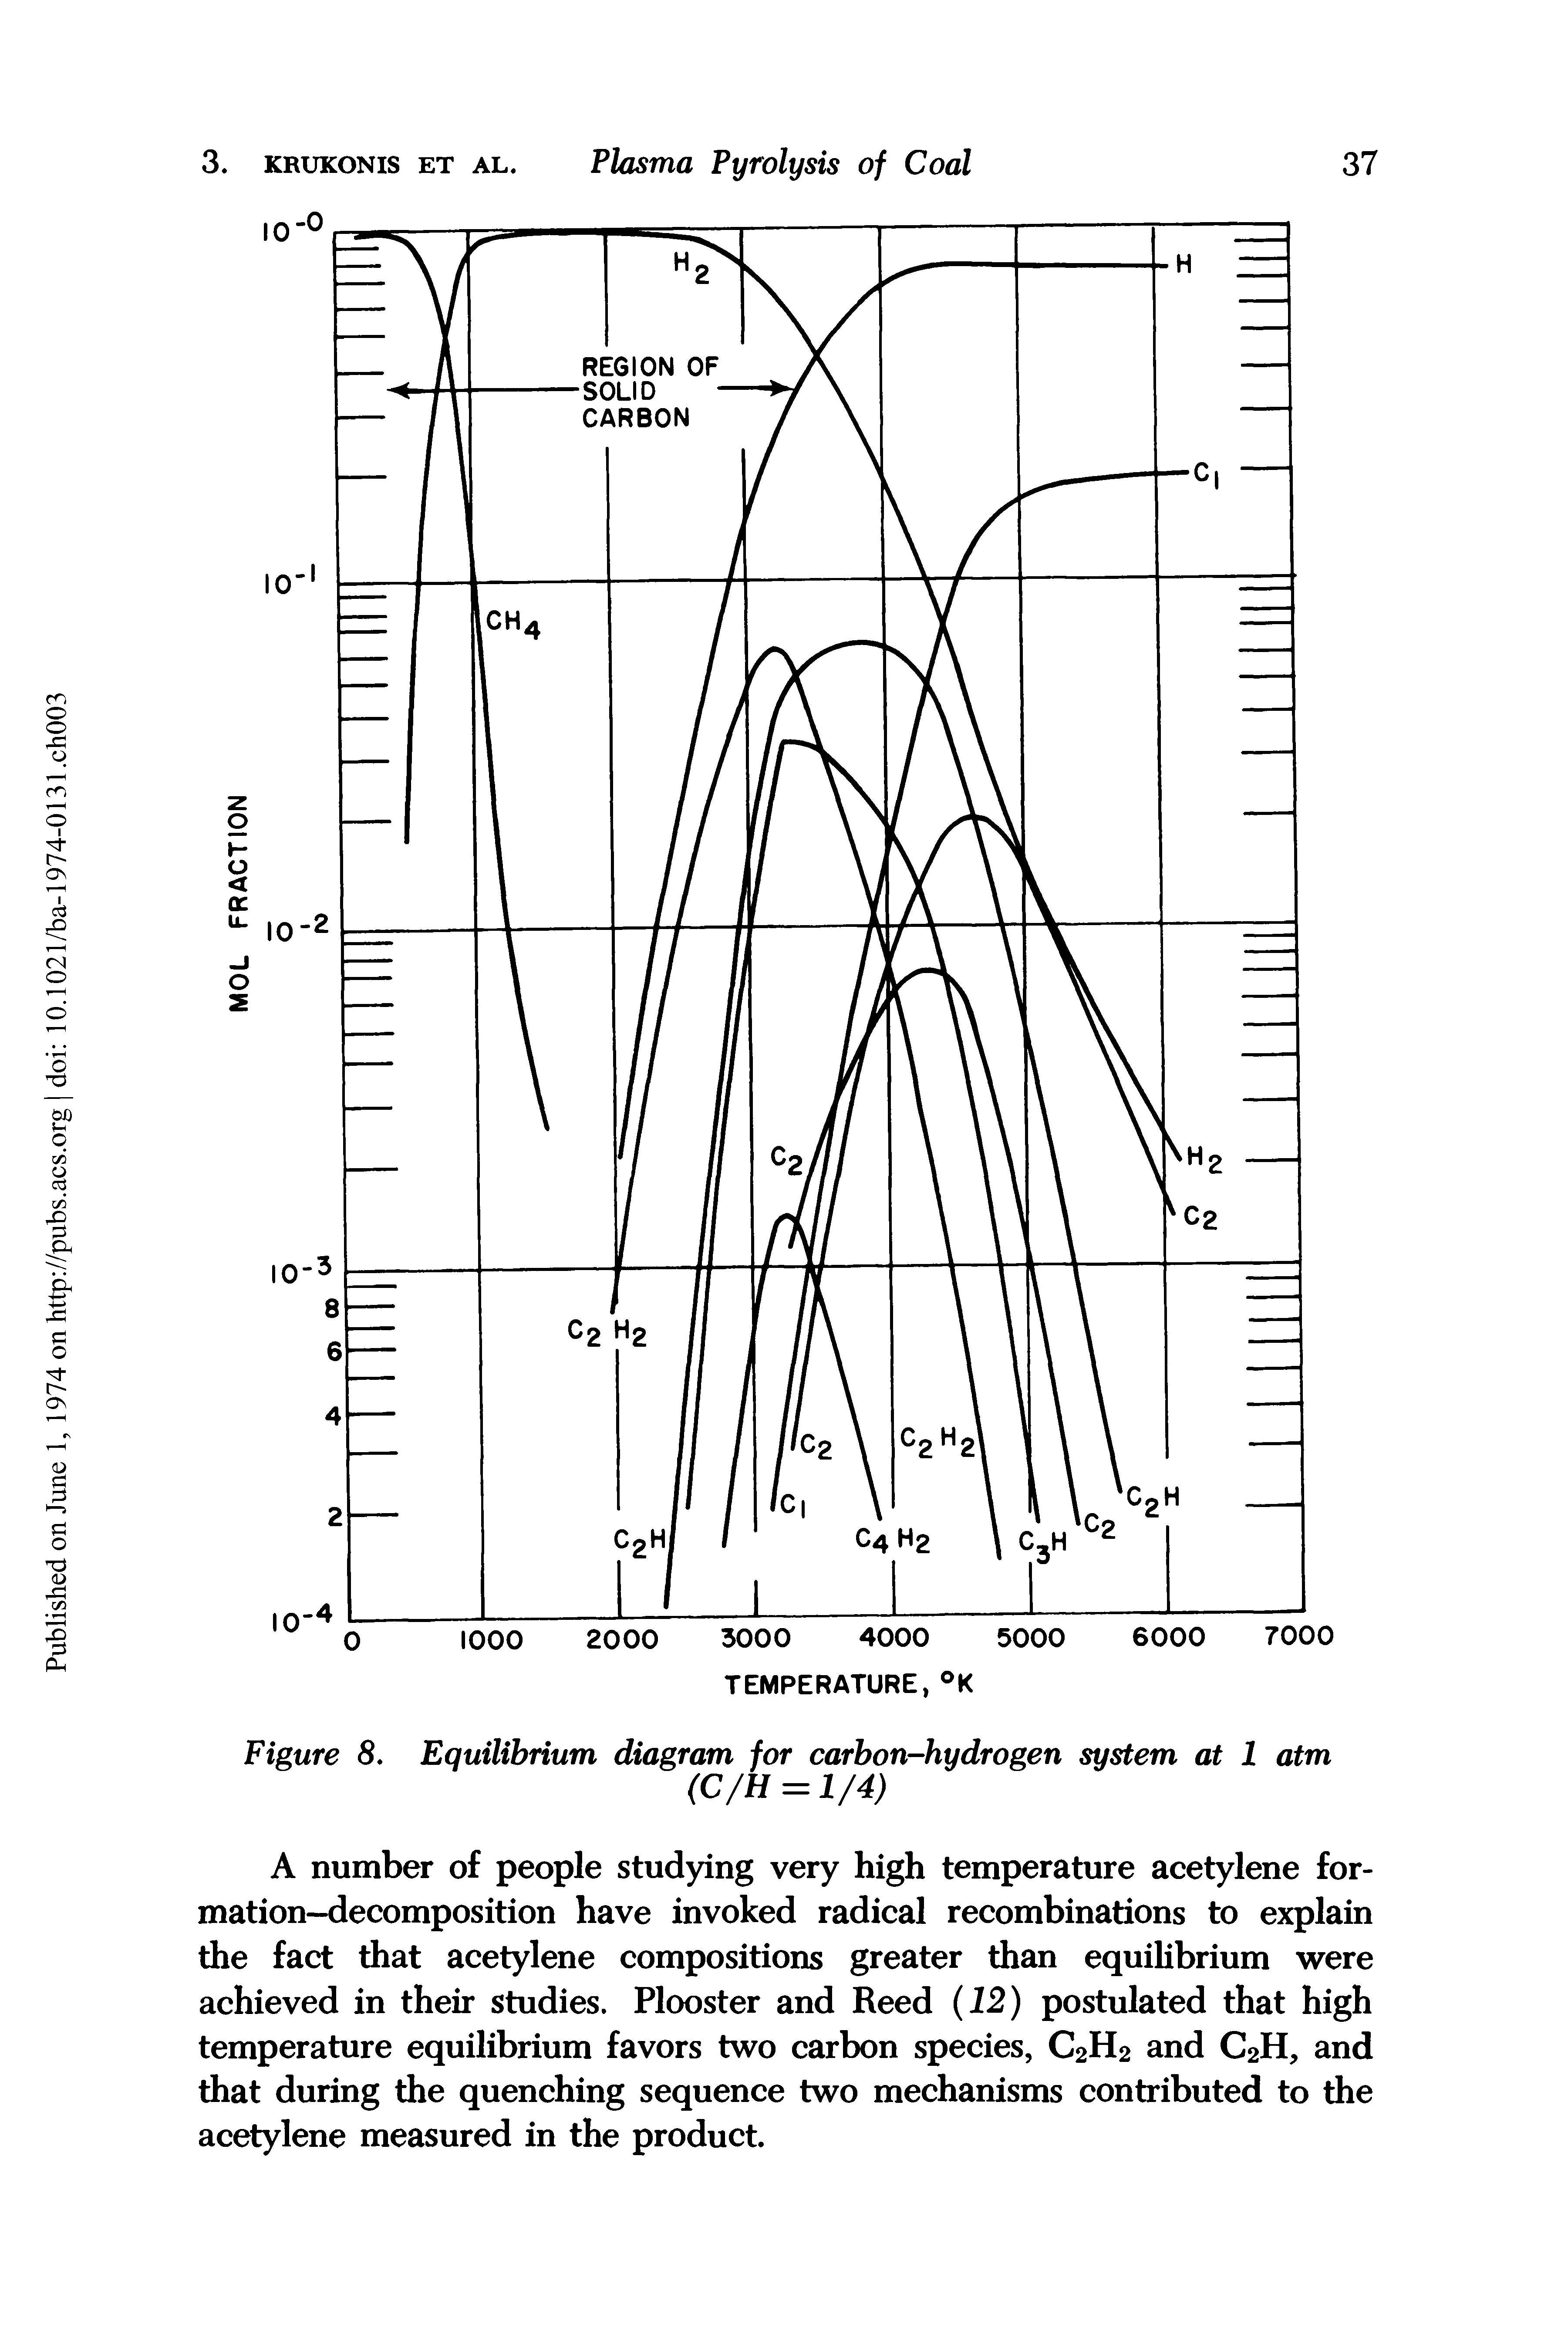 Figure 8. Equilibrium diagram for carbon-hydrogen system at 1 atm...